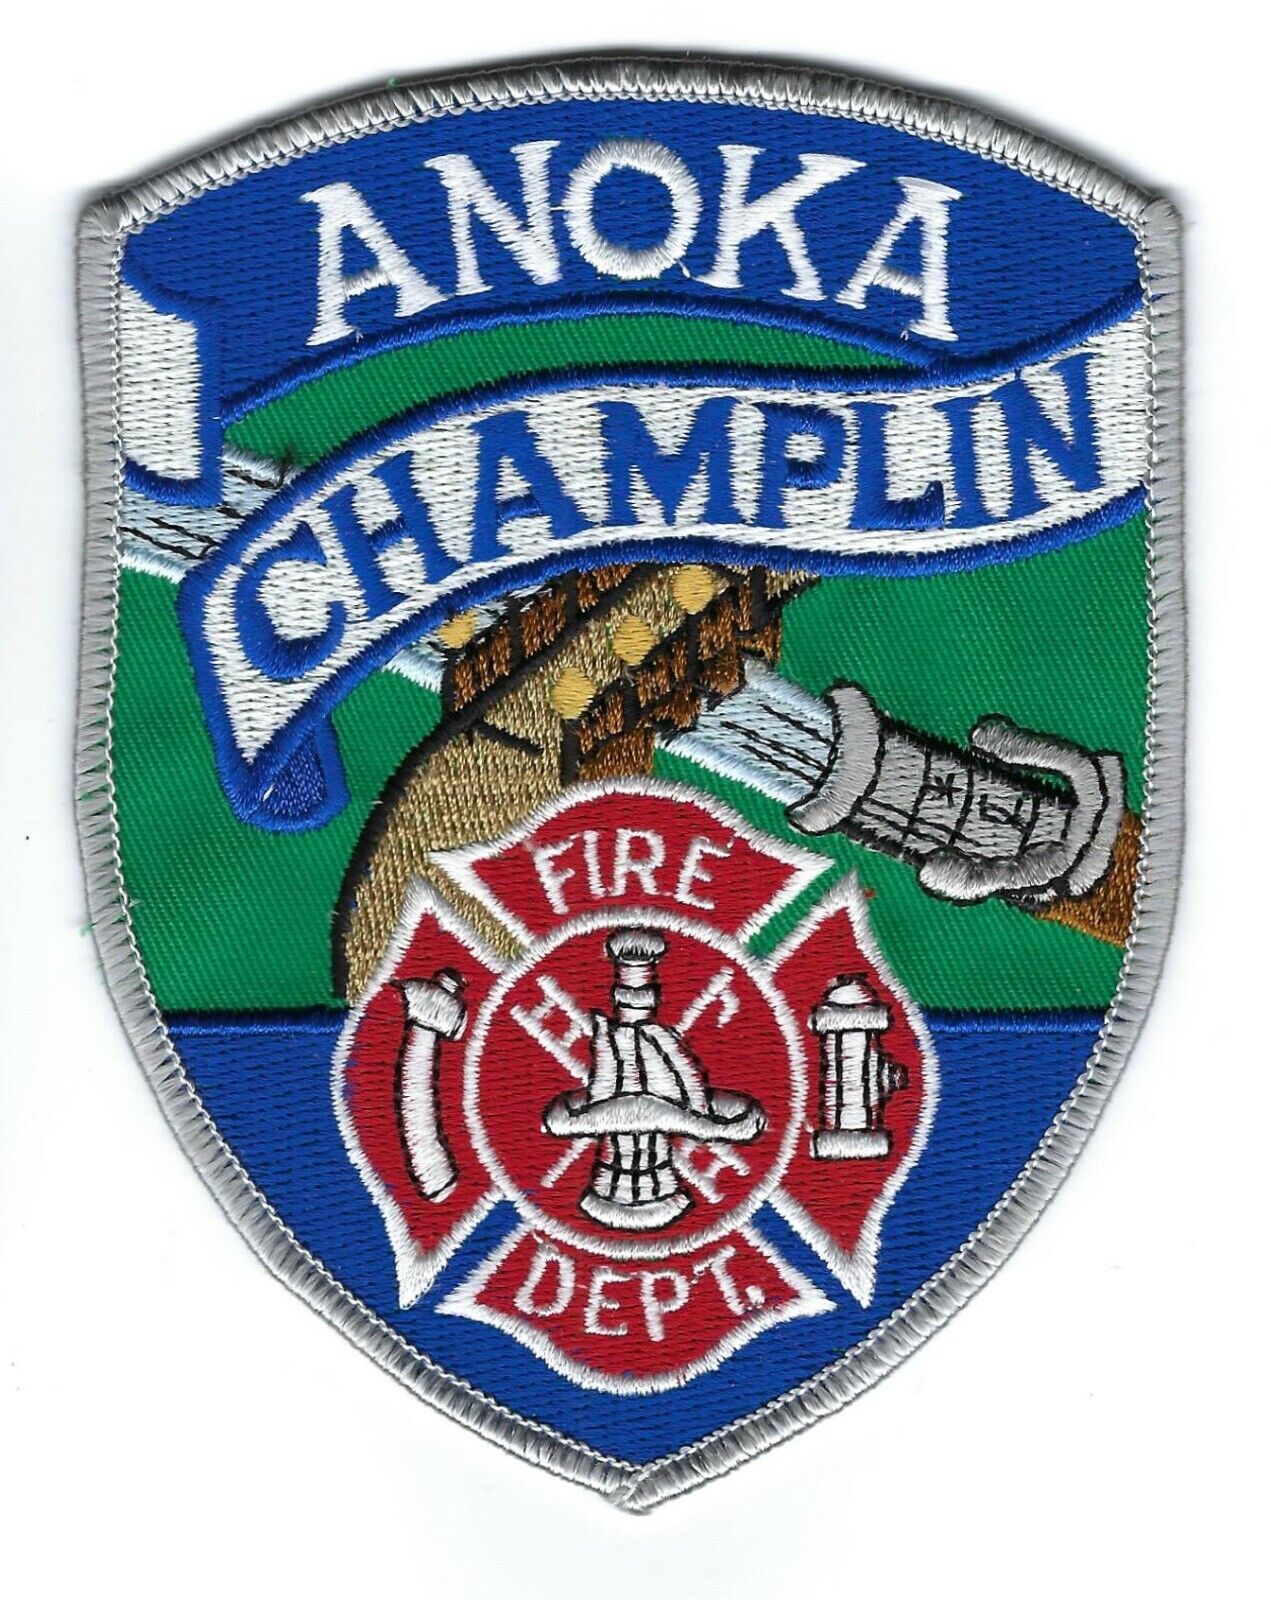 Anoka Champlin (Anoka County) MN Minnesota Fire Dept. patch - NEW